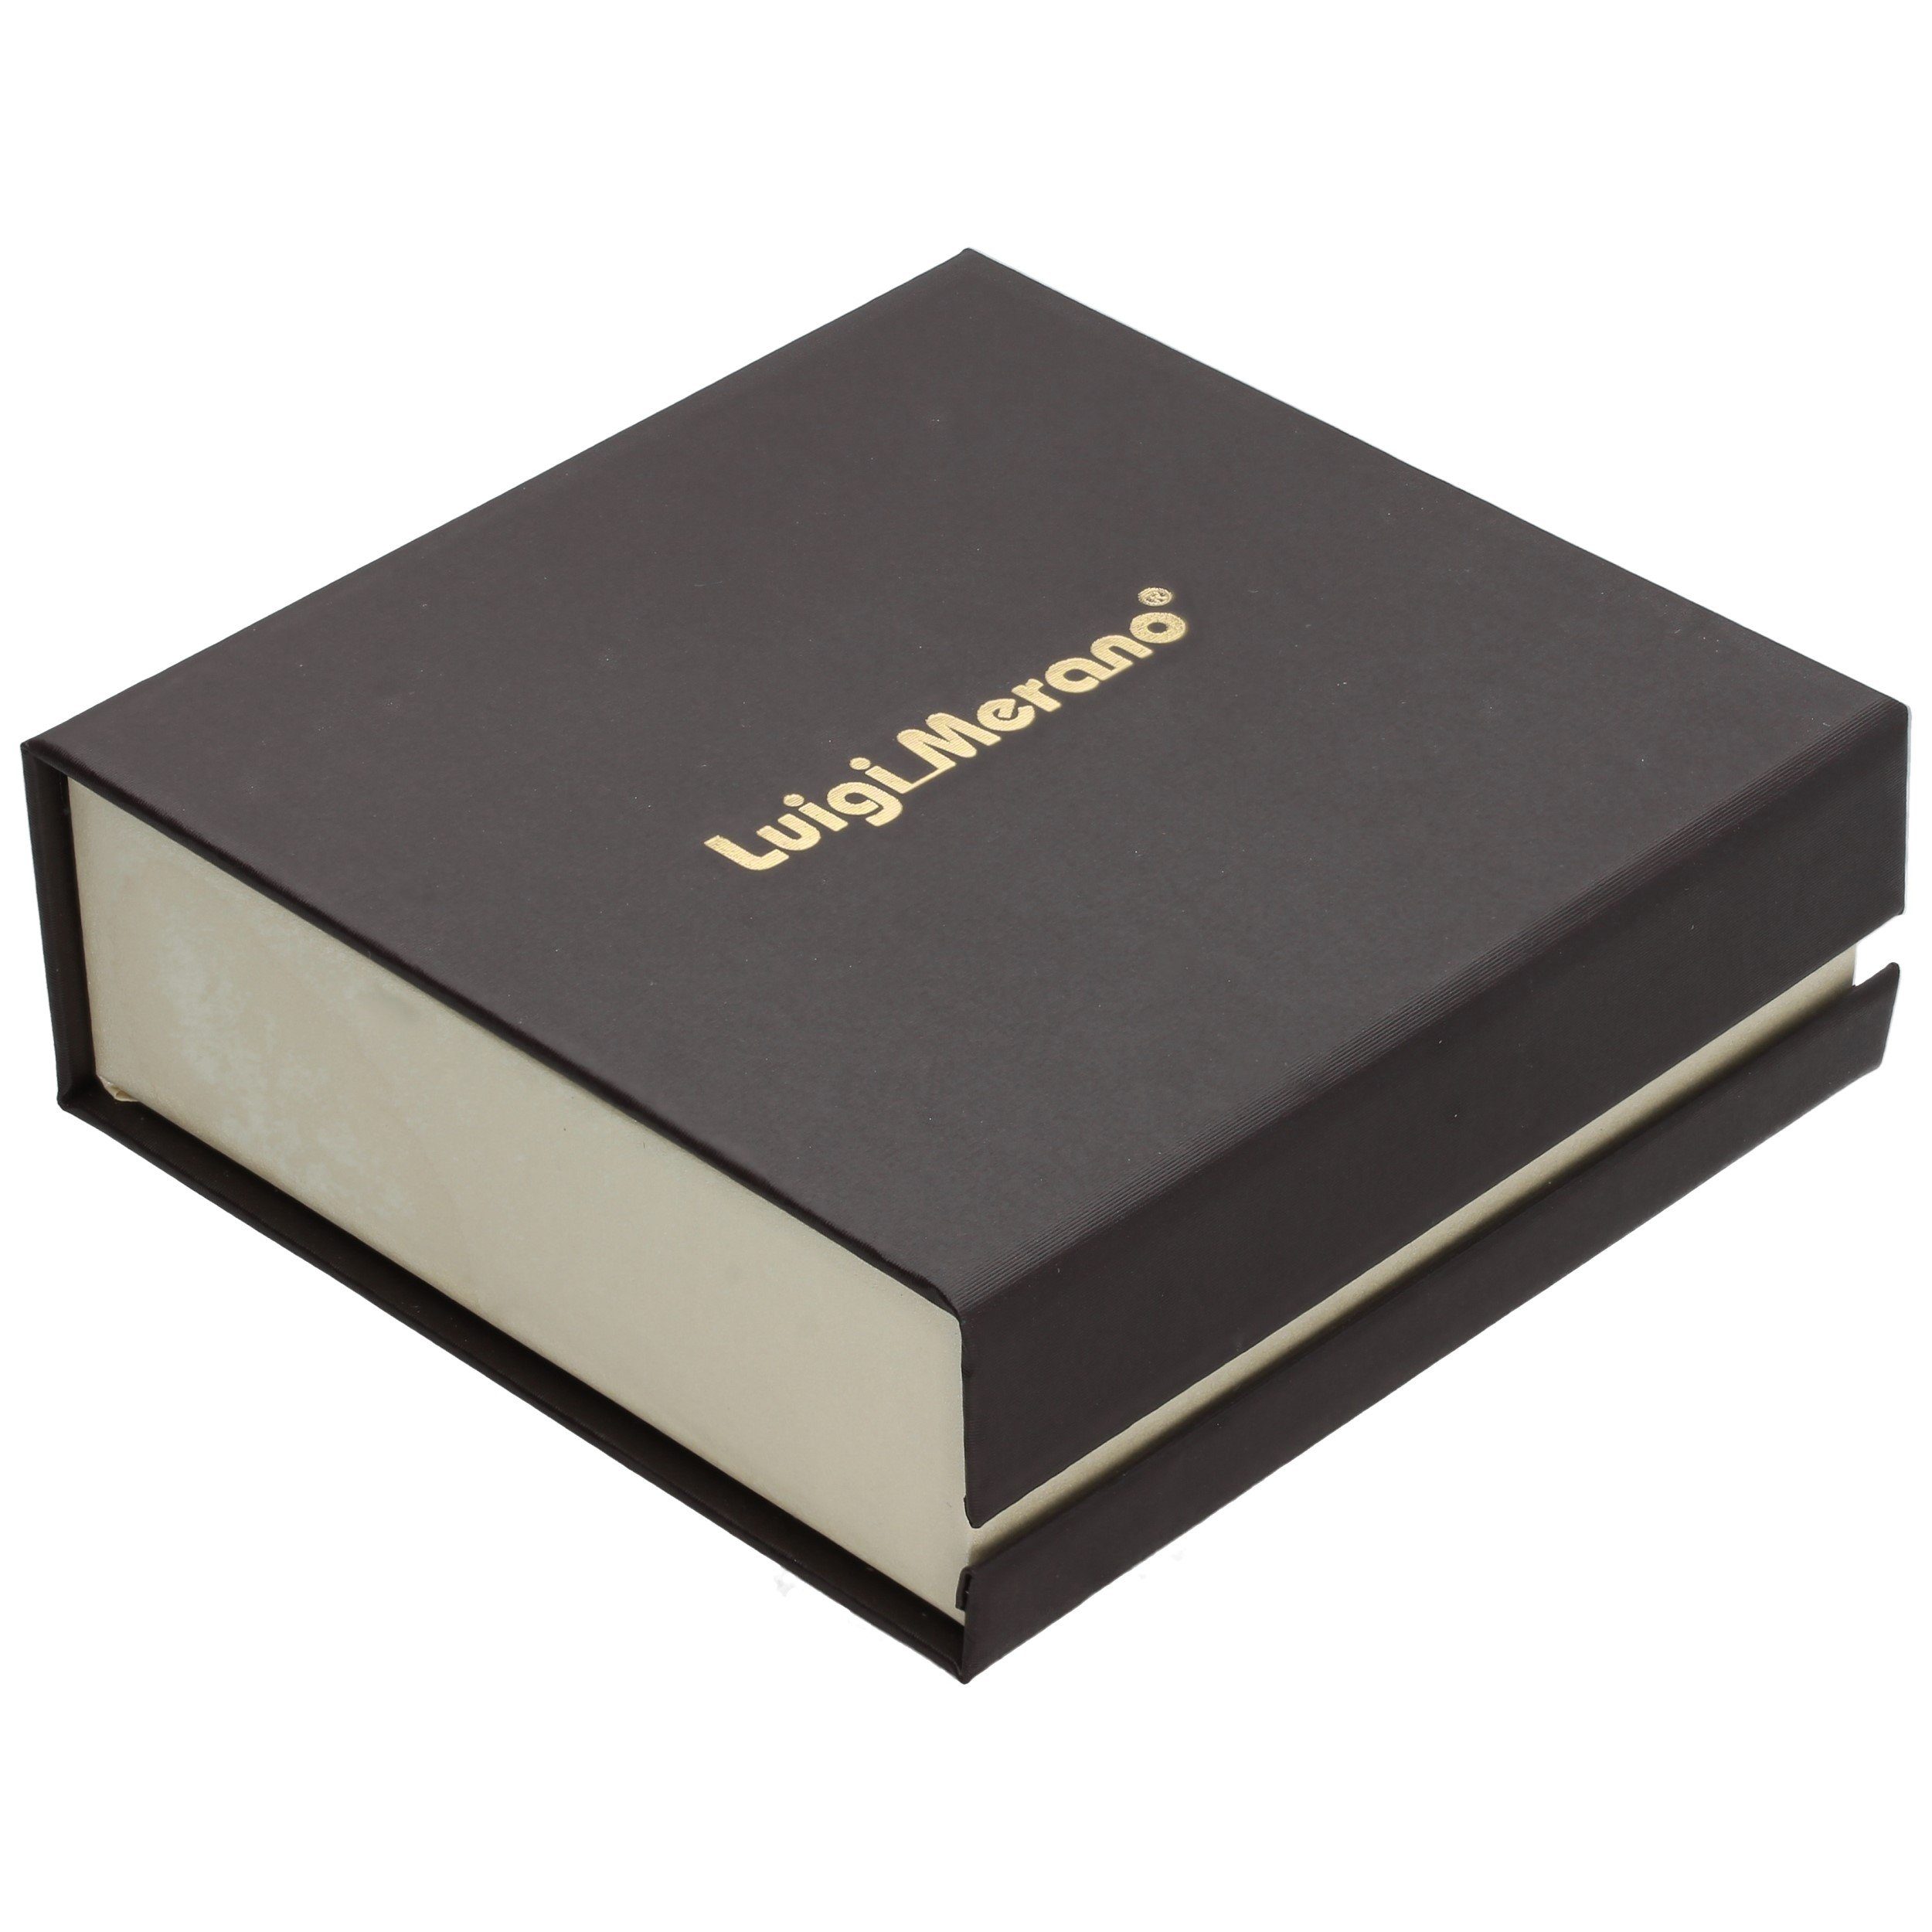 Merano 585 Armband diamantierte Luigi Gold Ankerglieder, lange